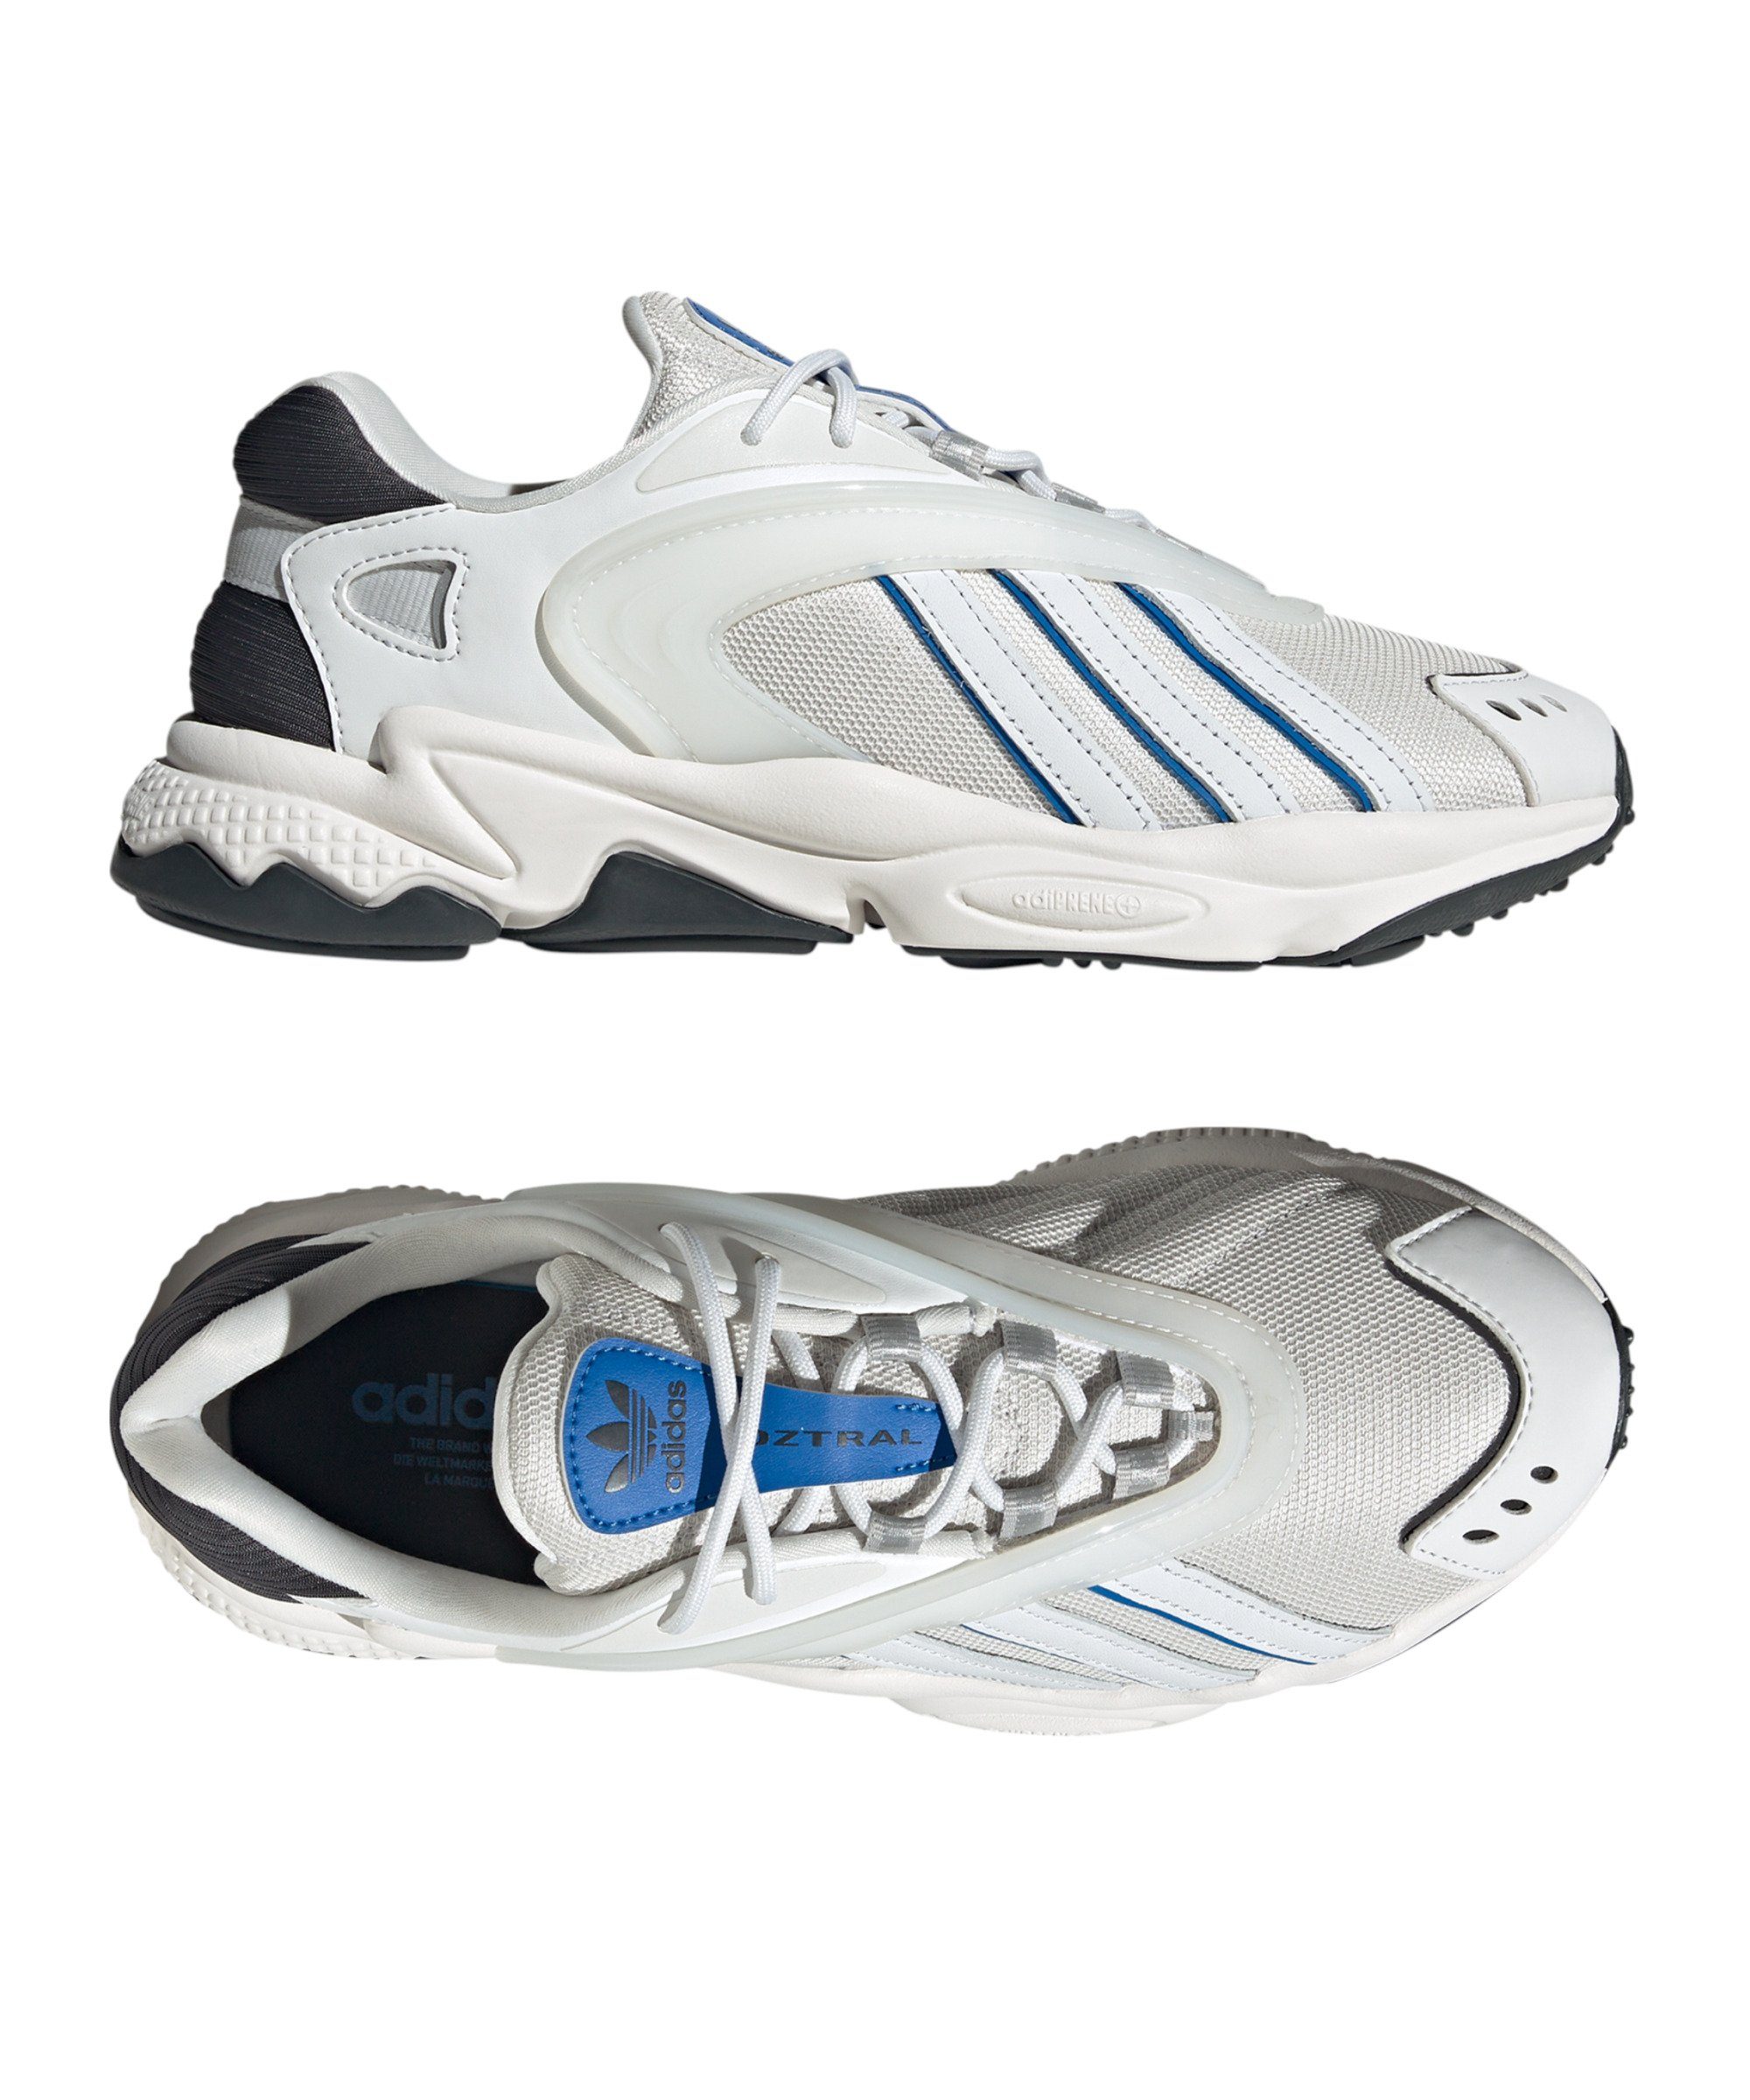 Oztral adidas Originals weissweissblau Sneaker